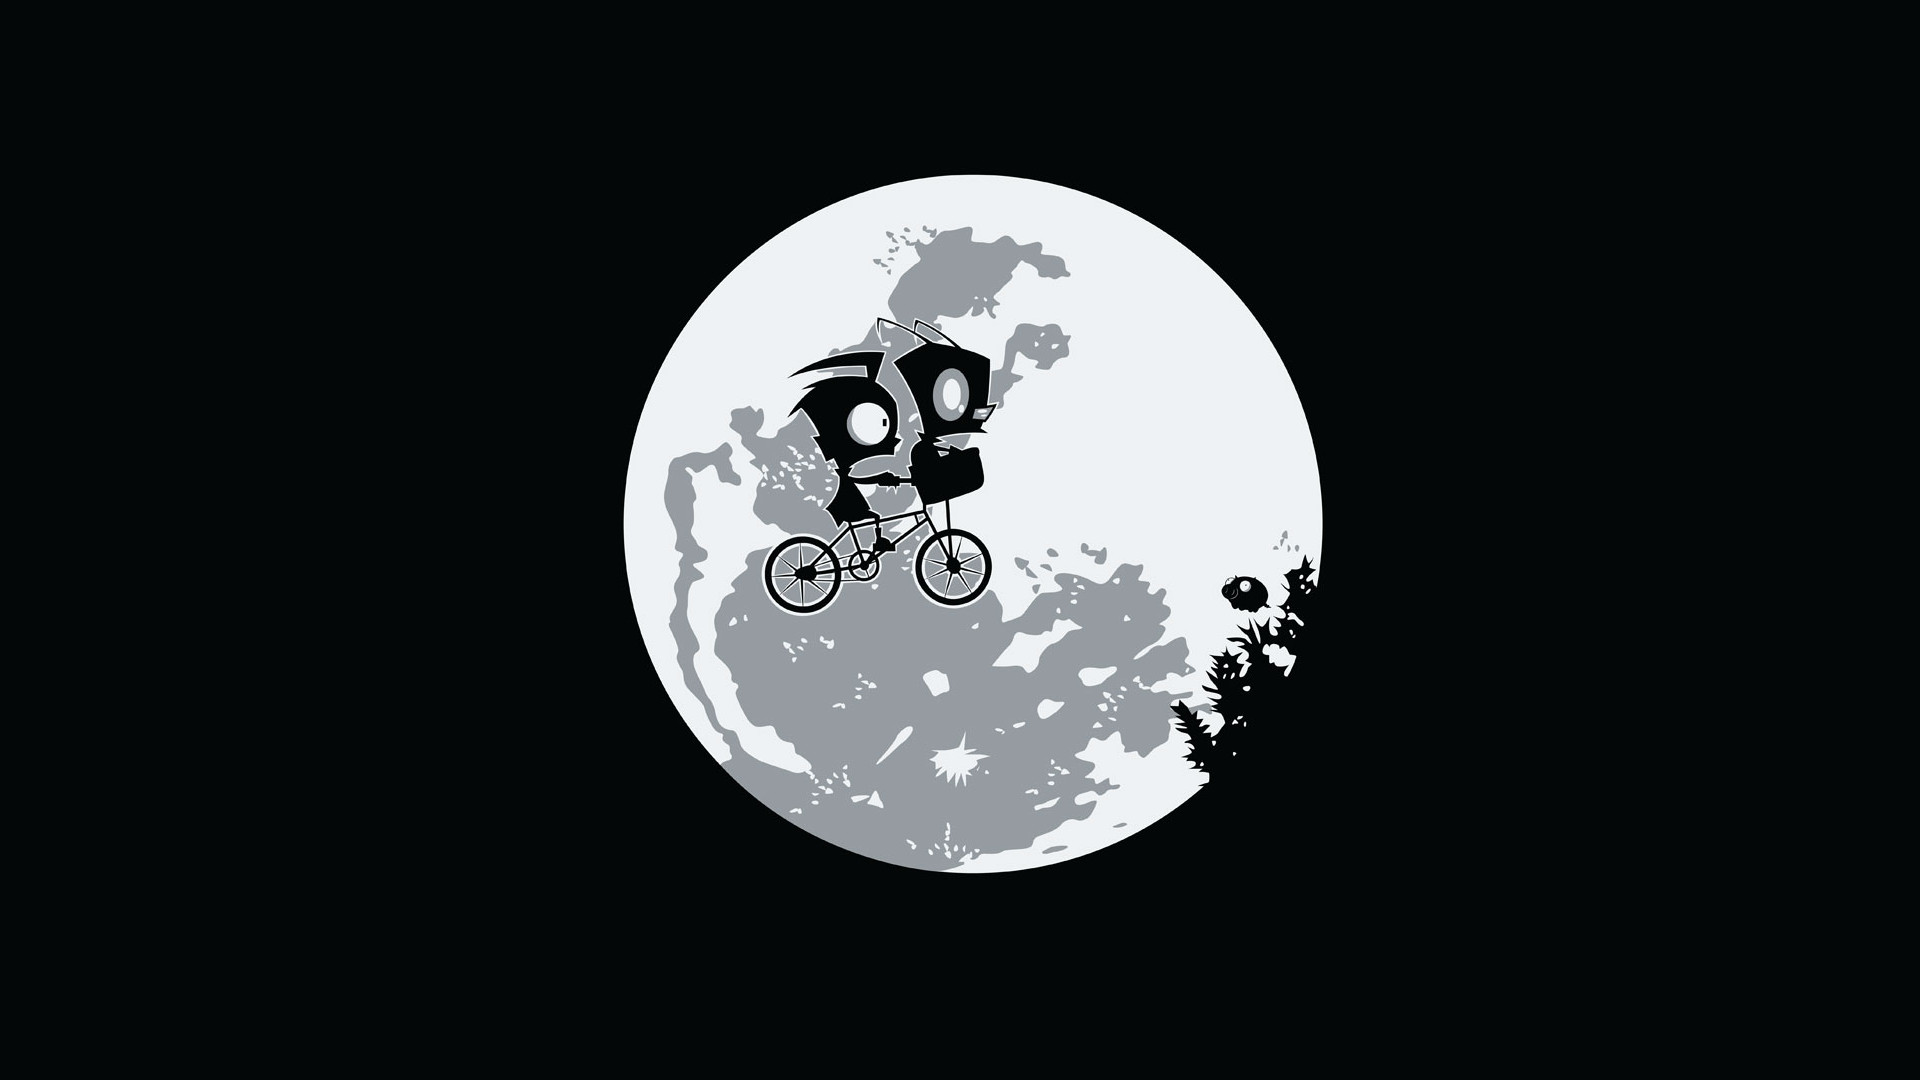 1920x1080 General  Invader Zim Moon artwork E.T. humor monochrome digital  art bicycle